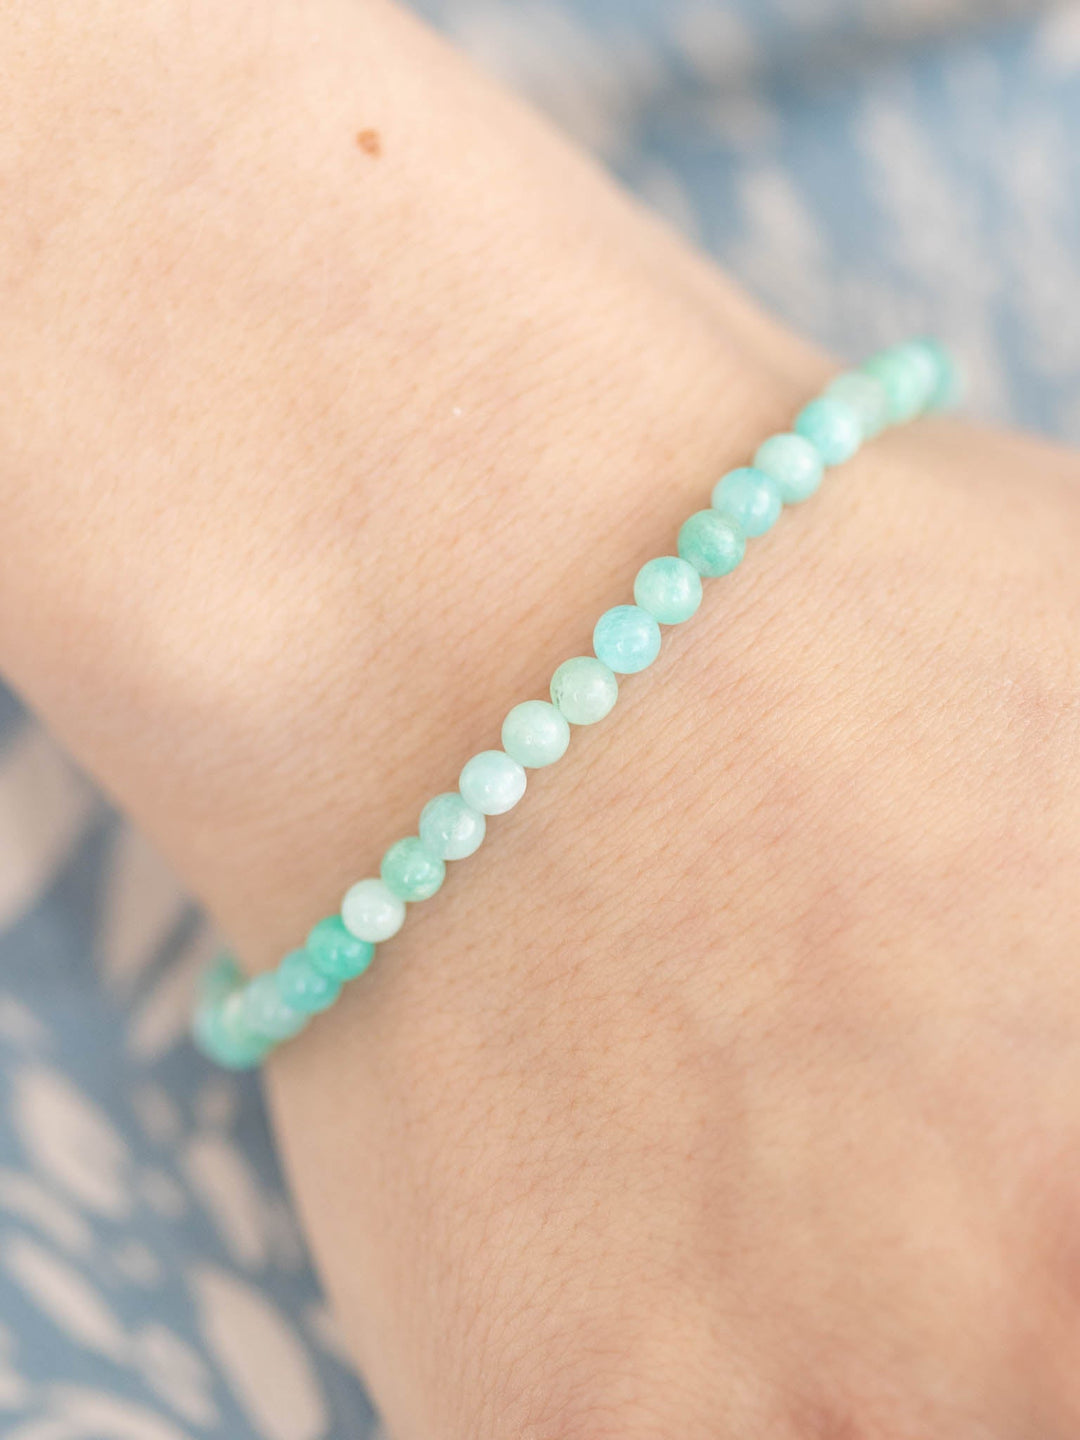 gorjana Carter Gemstone Bracelet - Blue AmazonitePremium bracelet